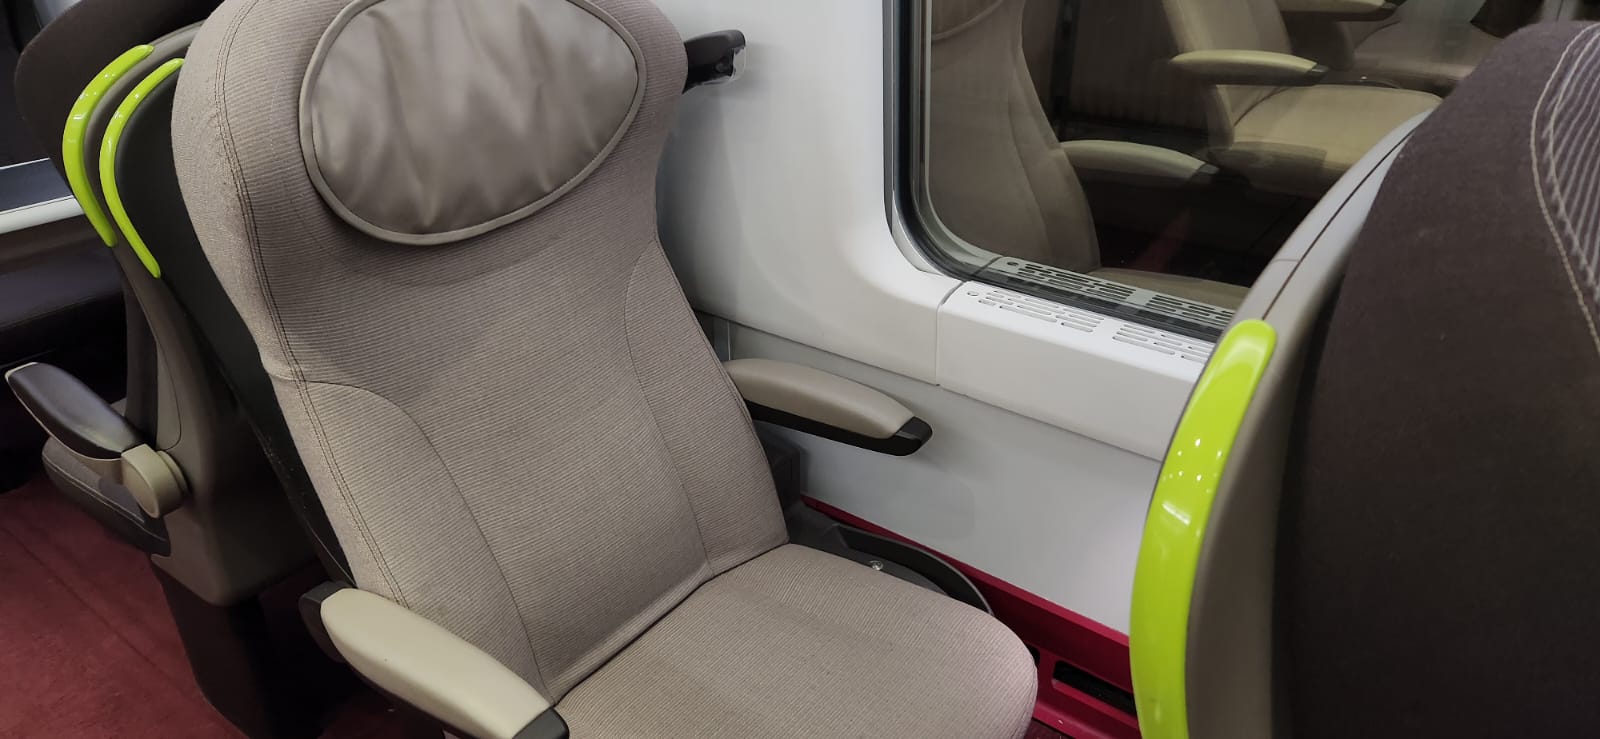 A solo seat in a Eurostar Standard Premier class carriage